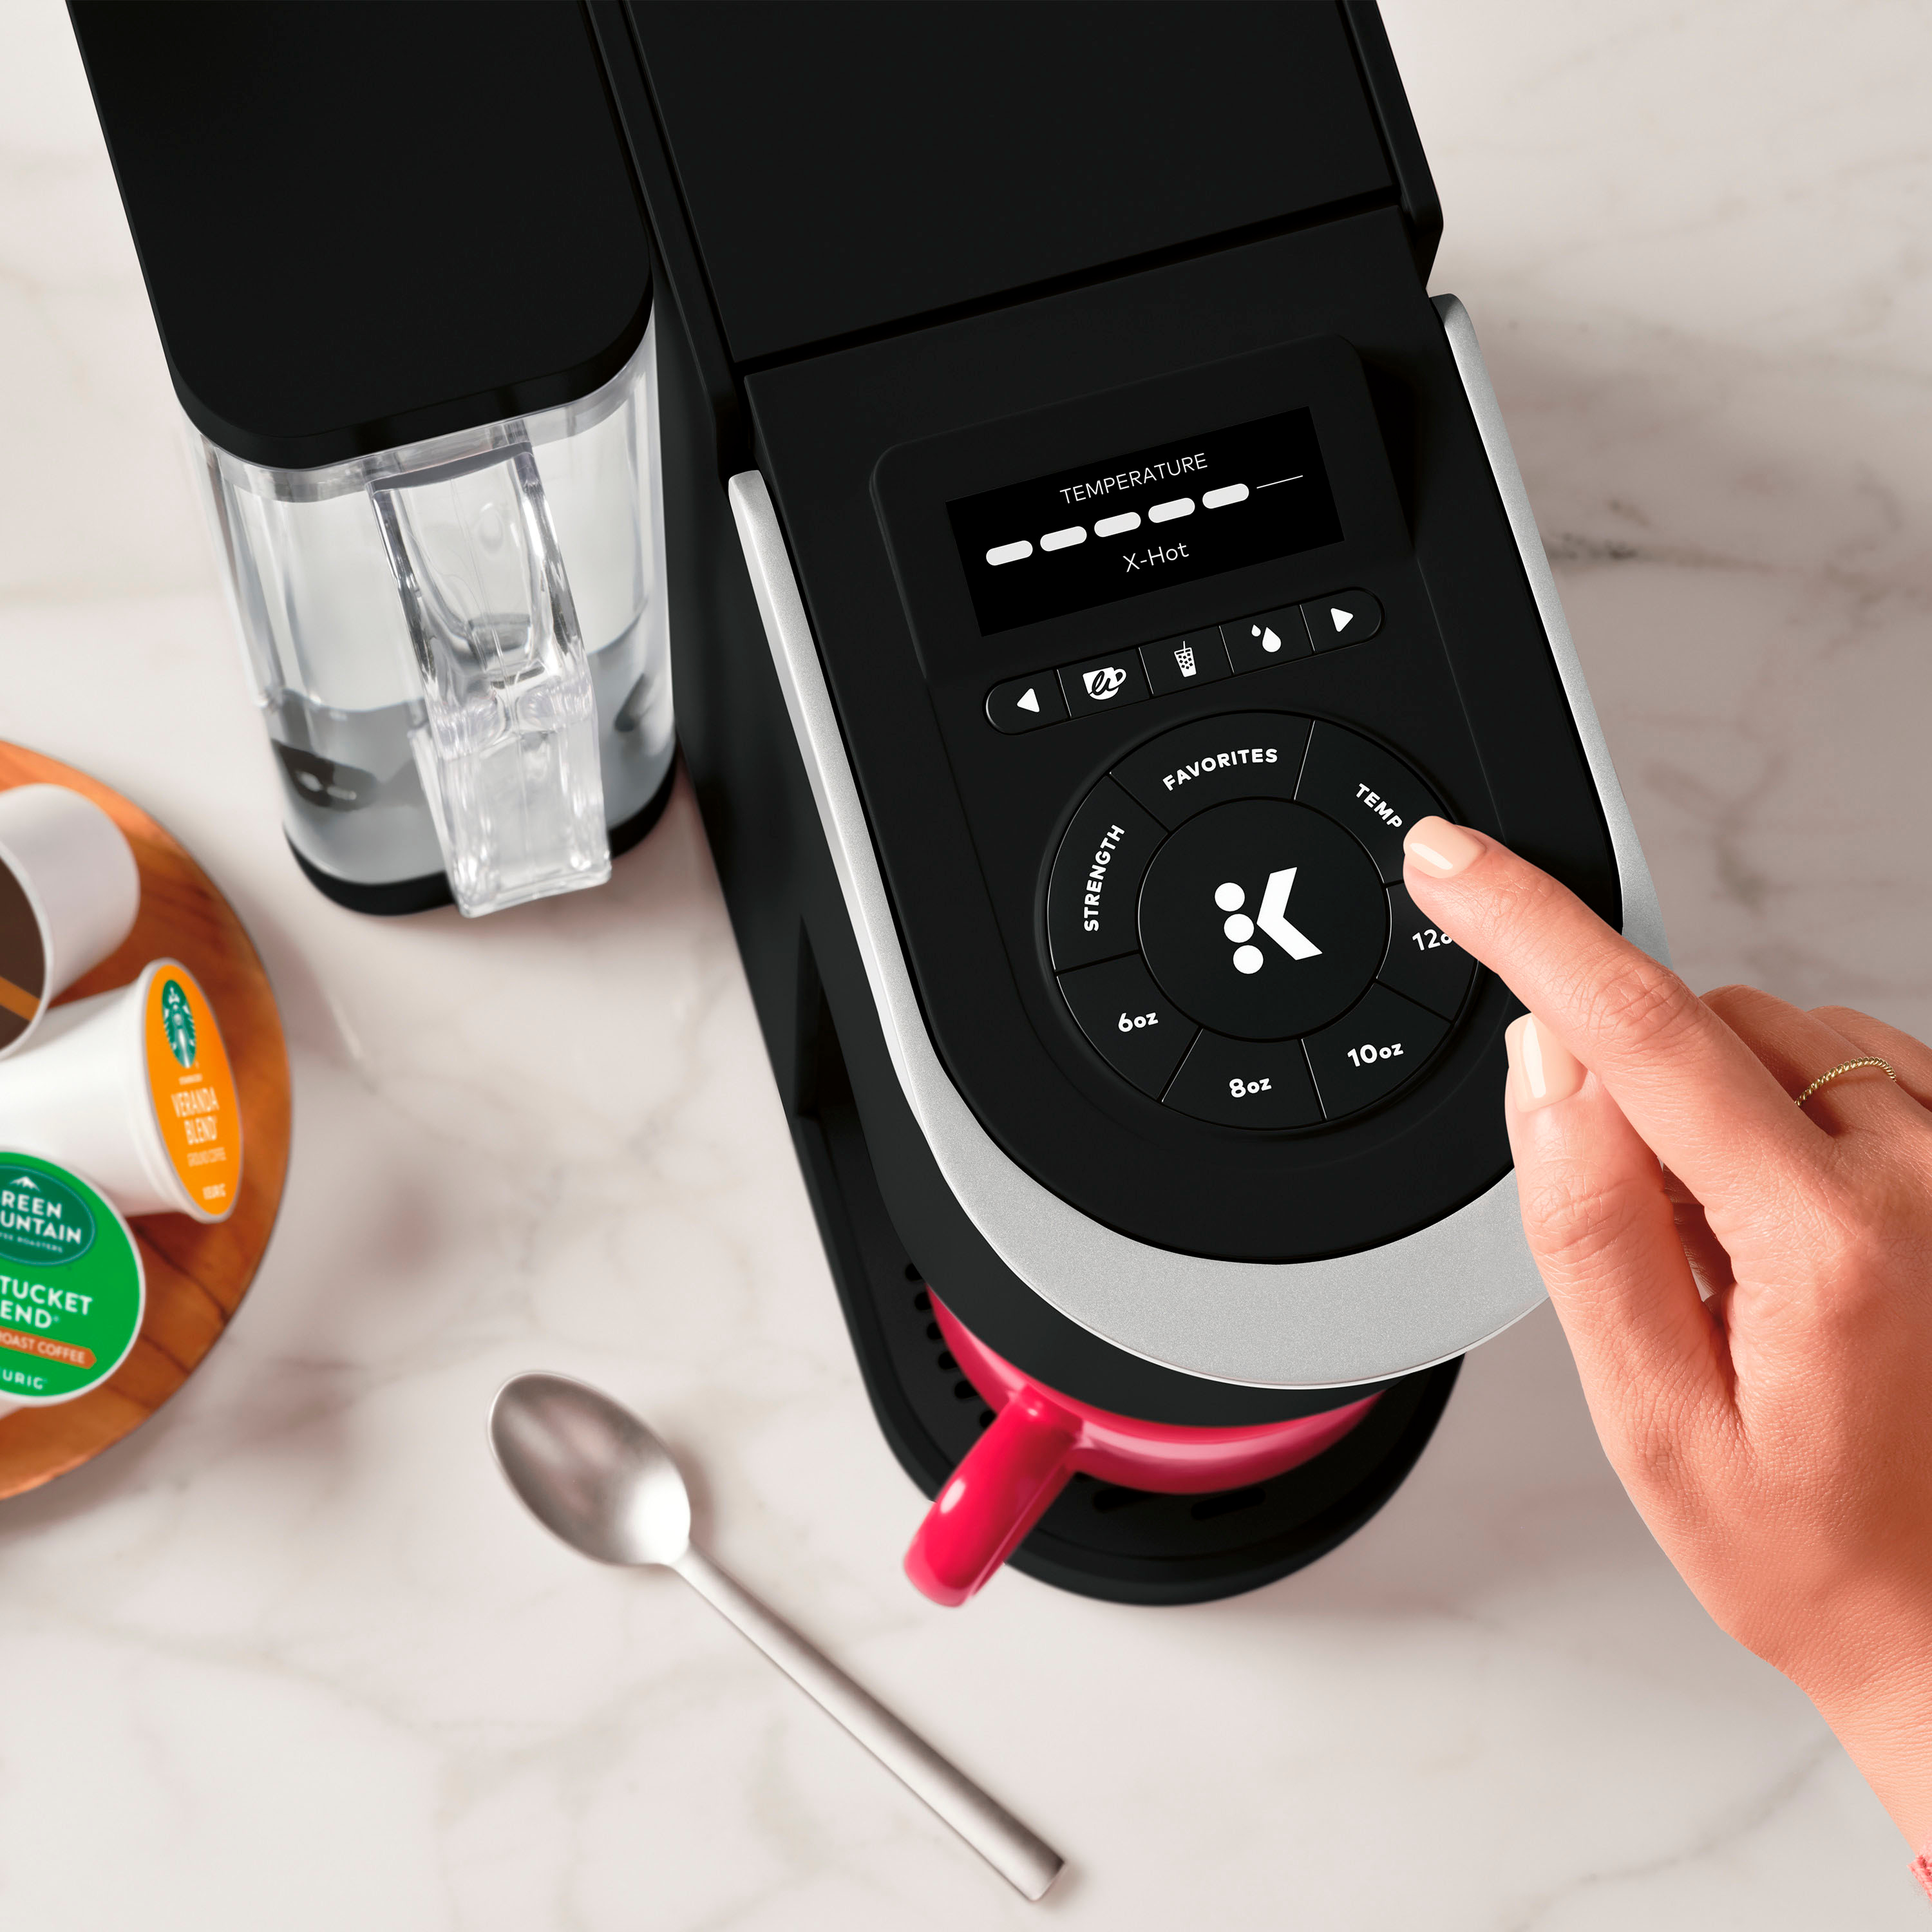 NEW!! Keurig K-Café SMART Single Serve Coffee Maker with WiFi